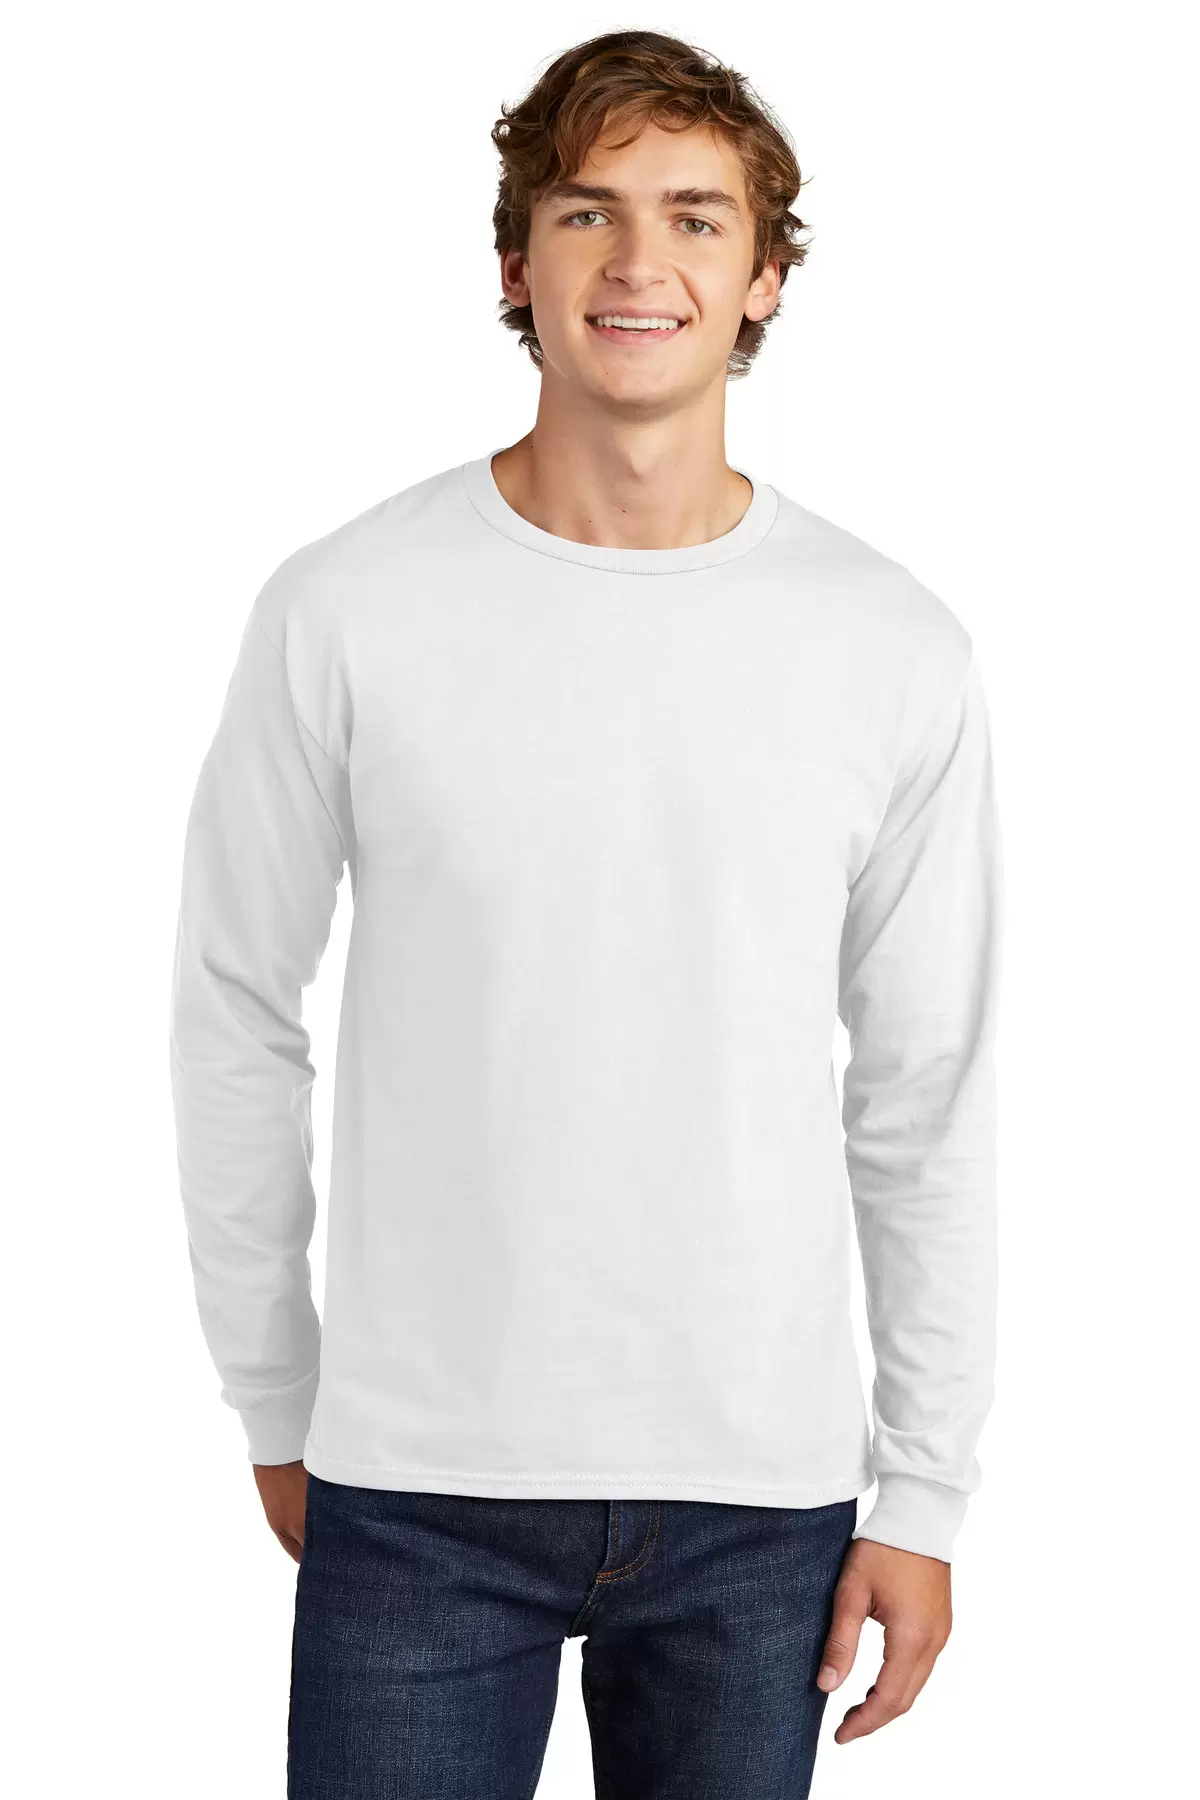 5286 Hanes® Heavyweight Long Sleeve T-shirt - From $4.62